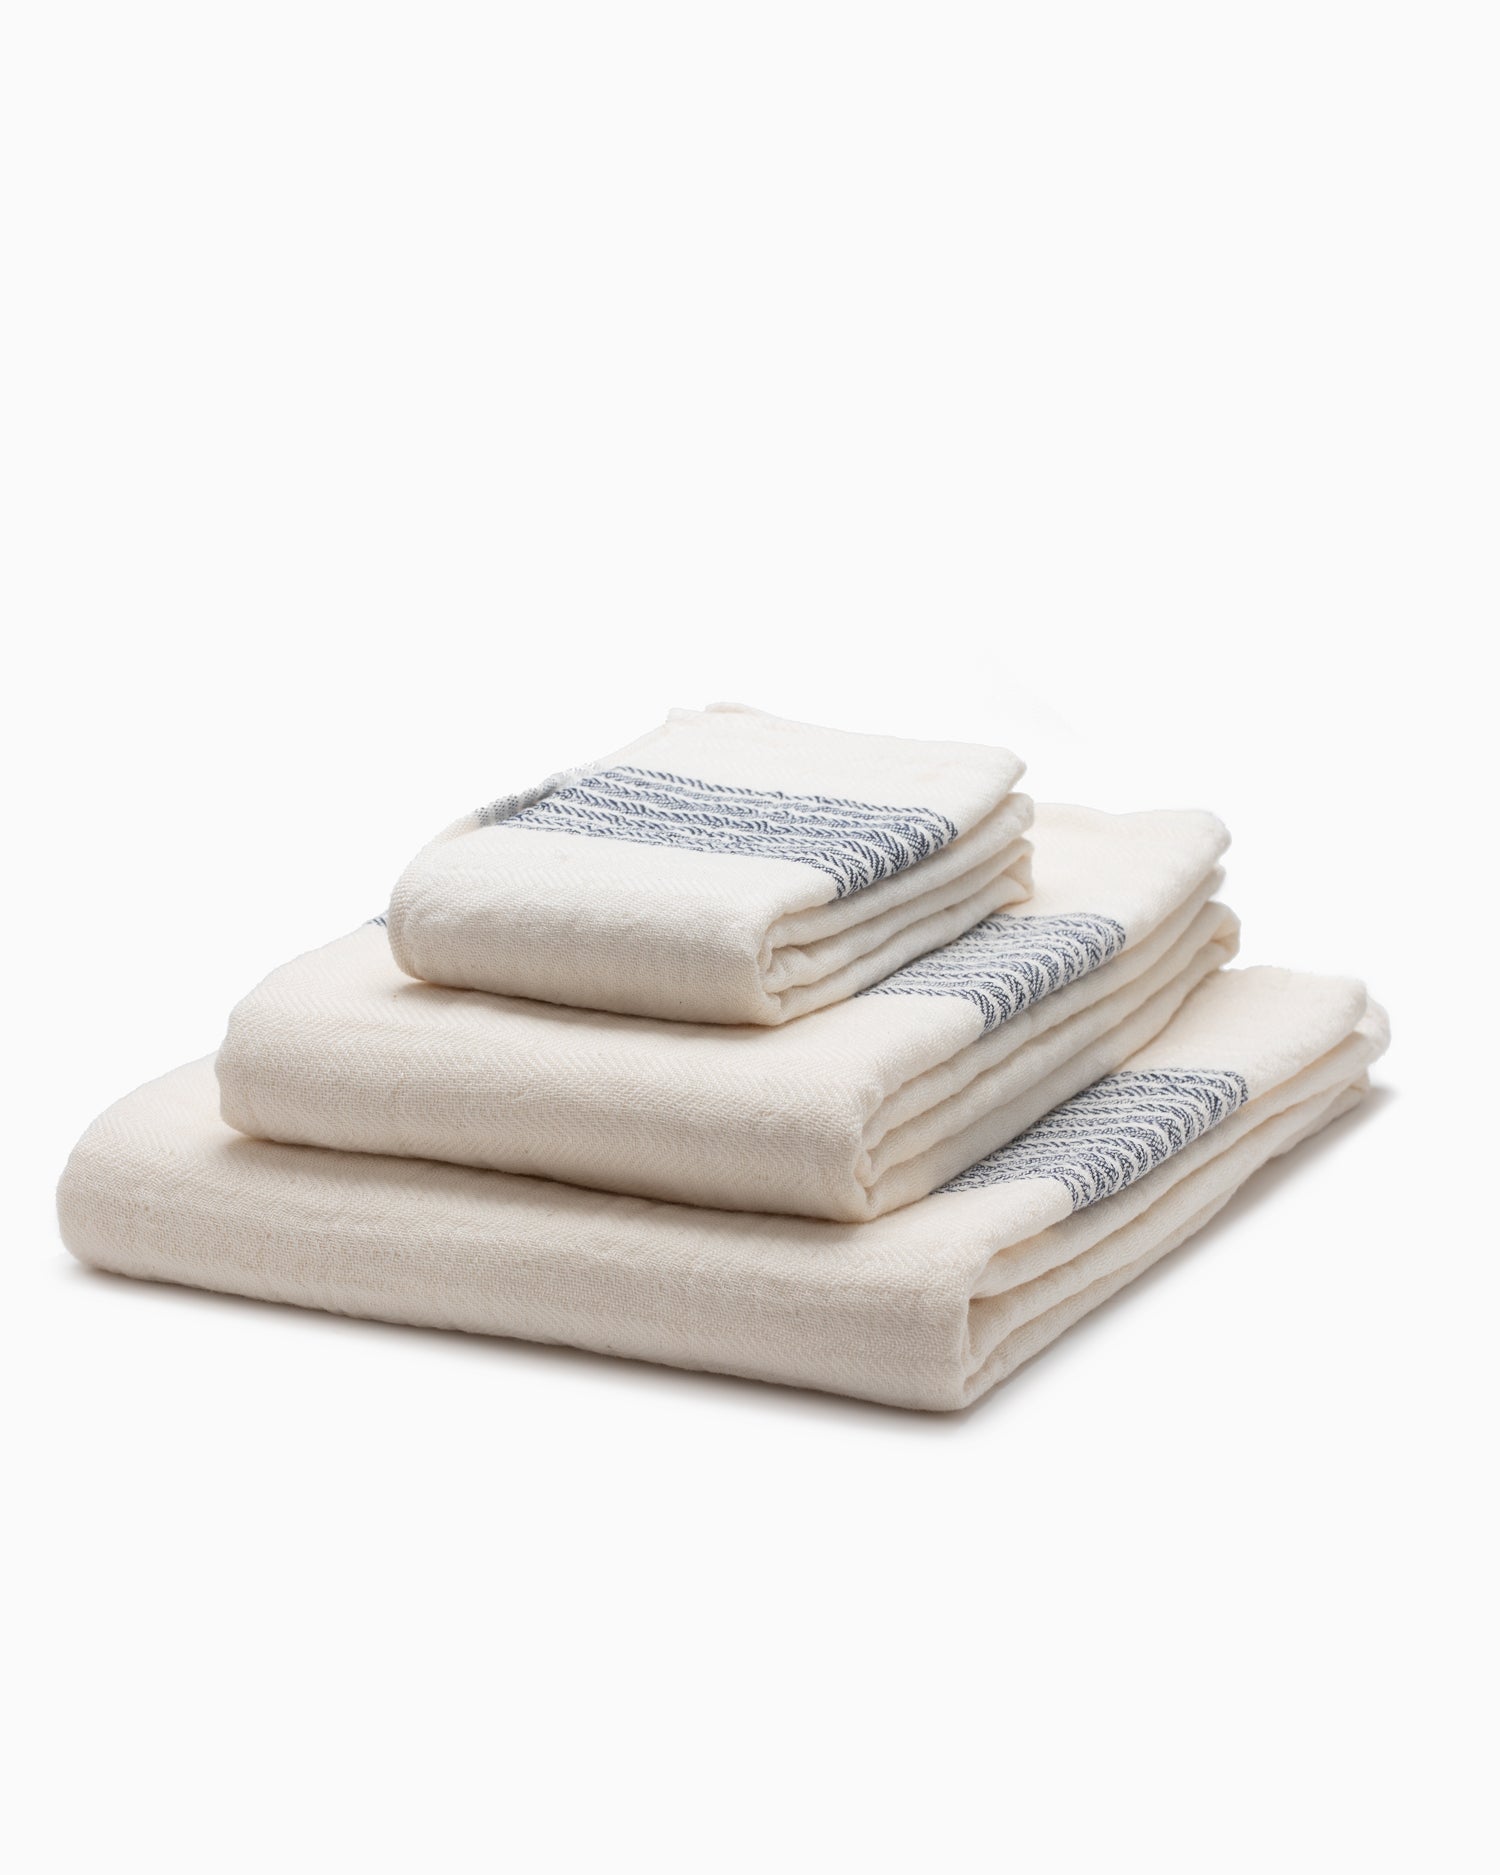 Flax Line Organic Hand Towel - Navy/Ivory